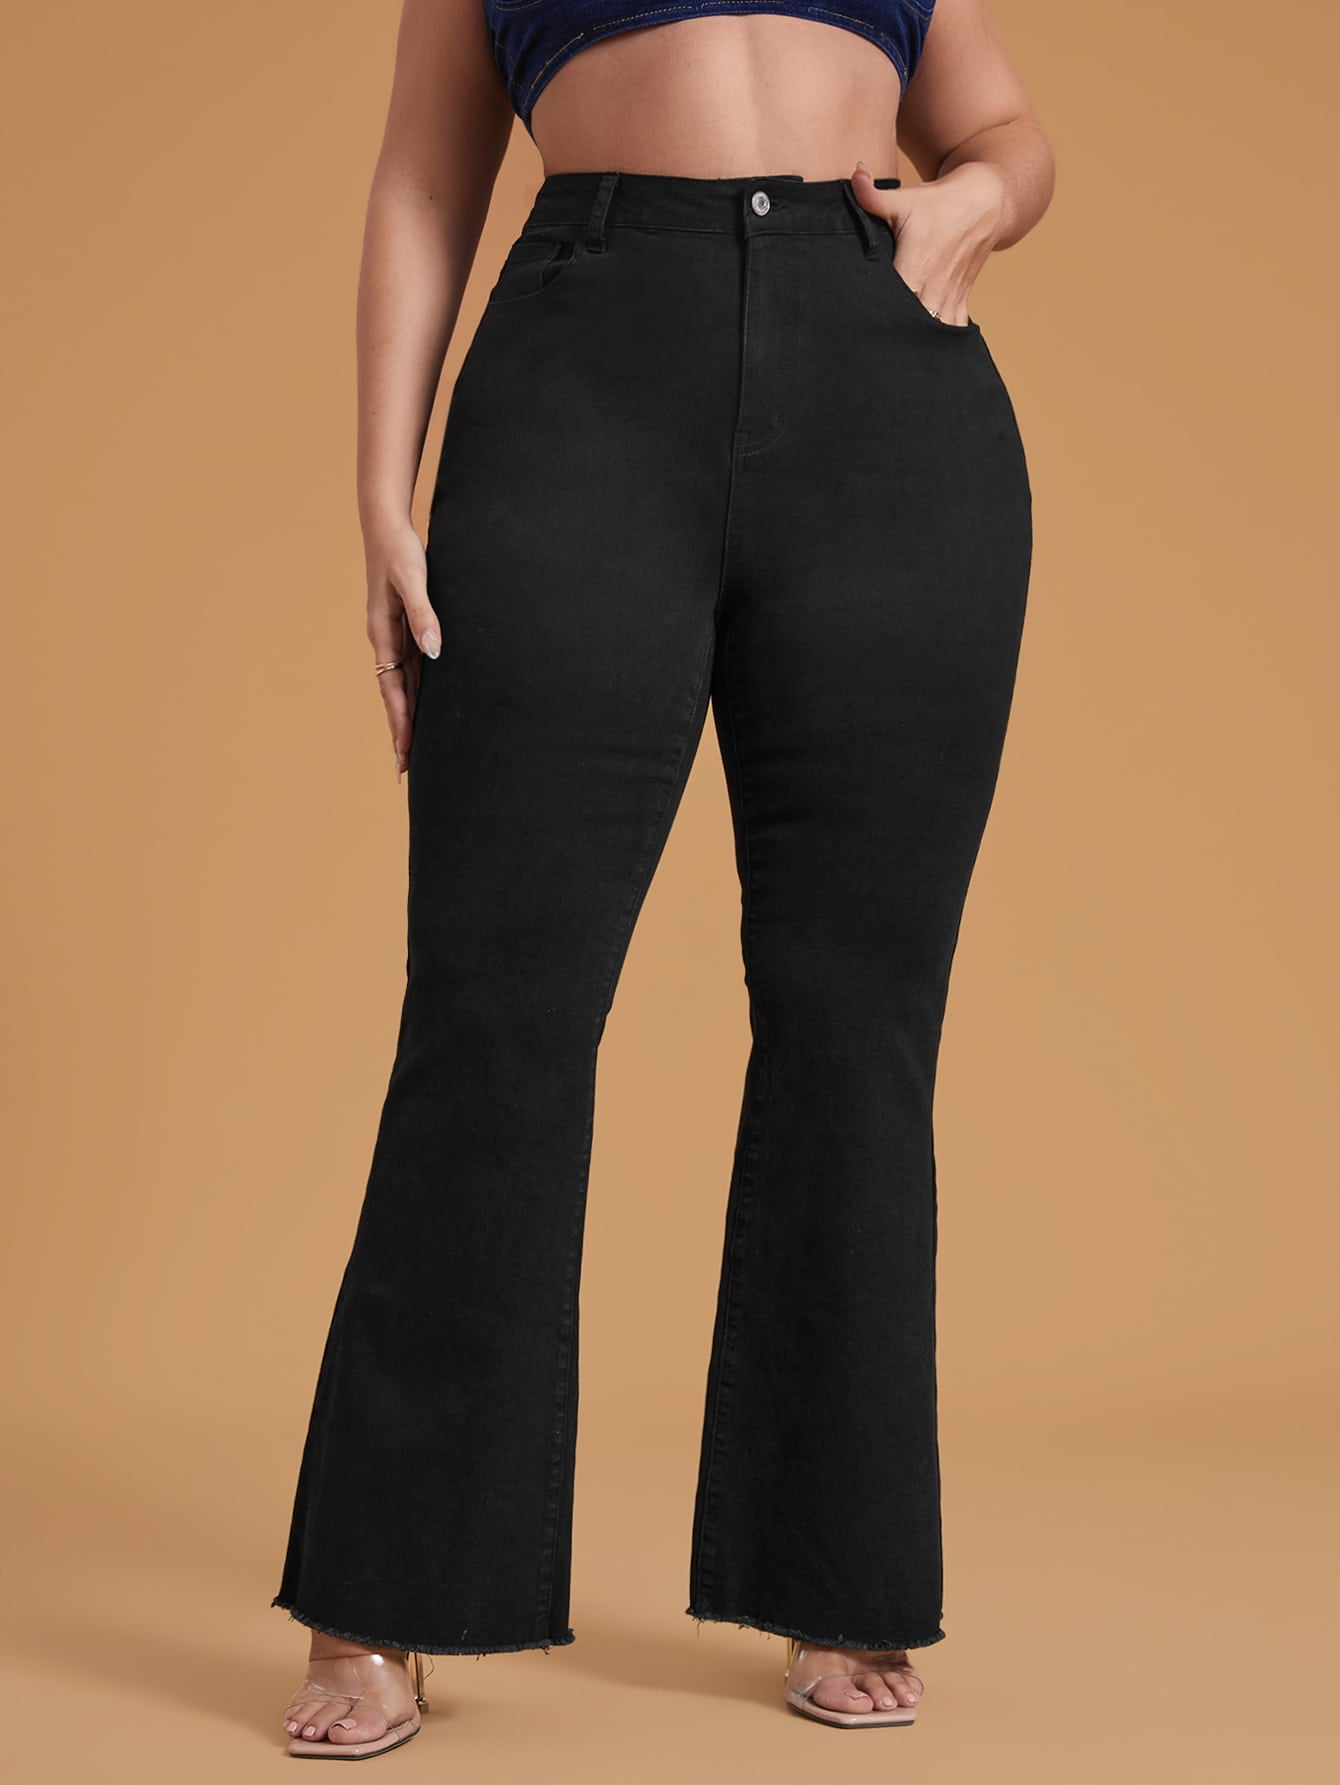 Crazy June Women's Plus Size High Waist Mini Flare Jeans, High Waist  Stretch Slim Fit Black Hip Raise Jeans